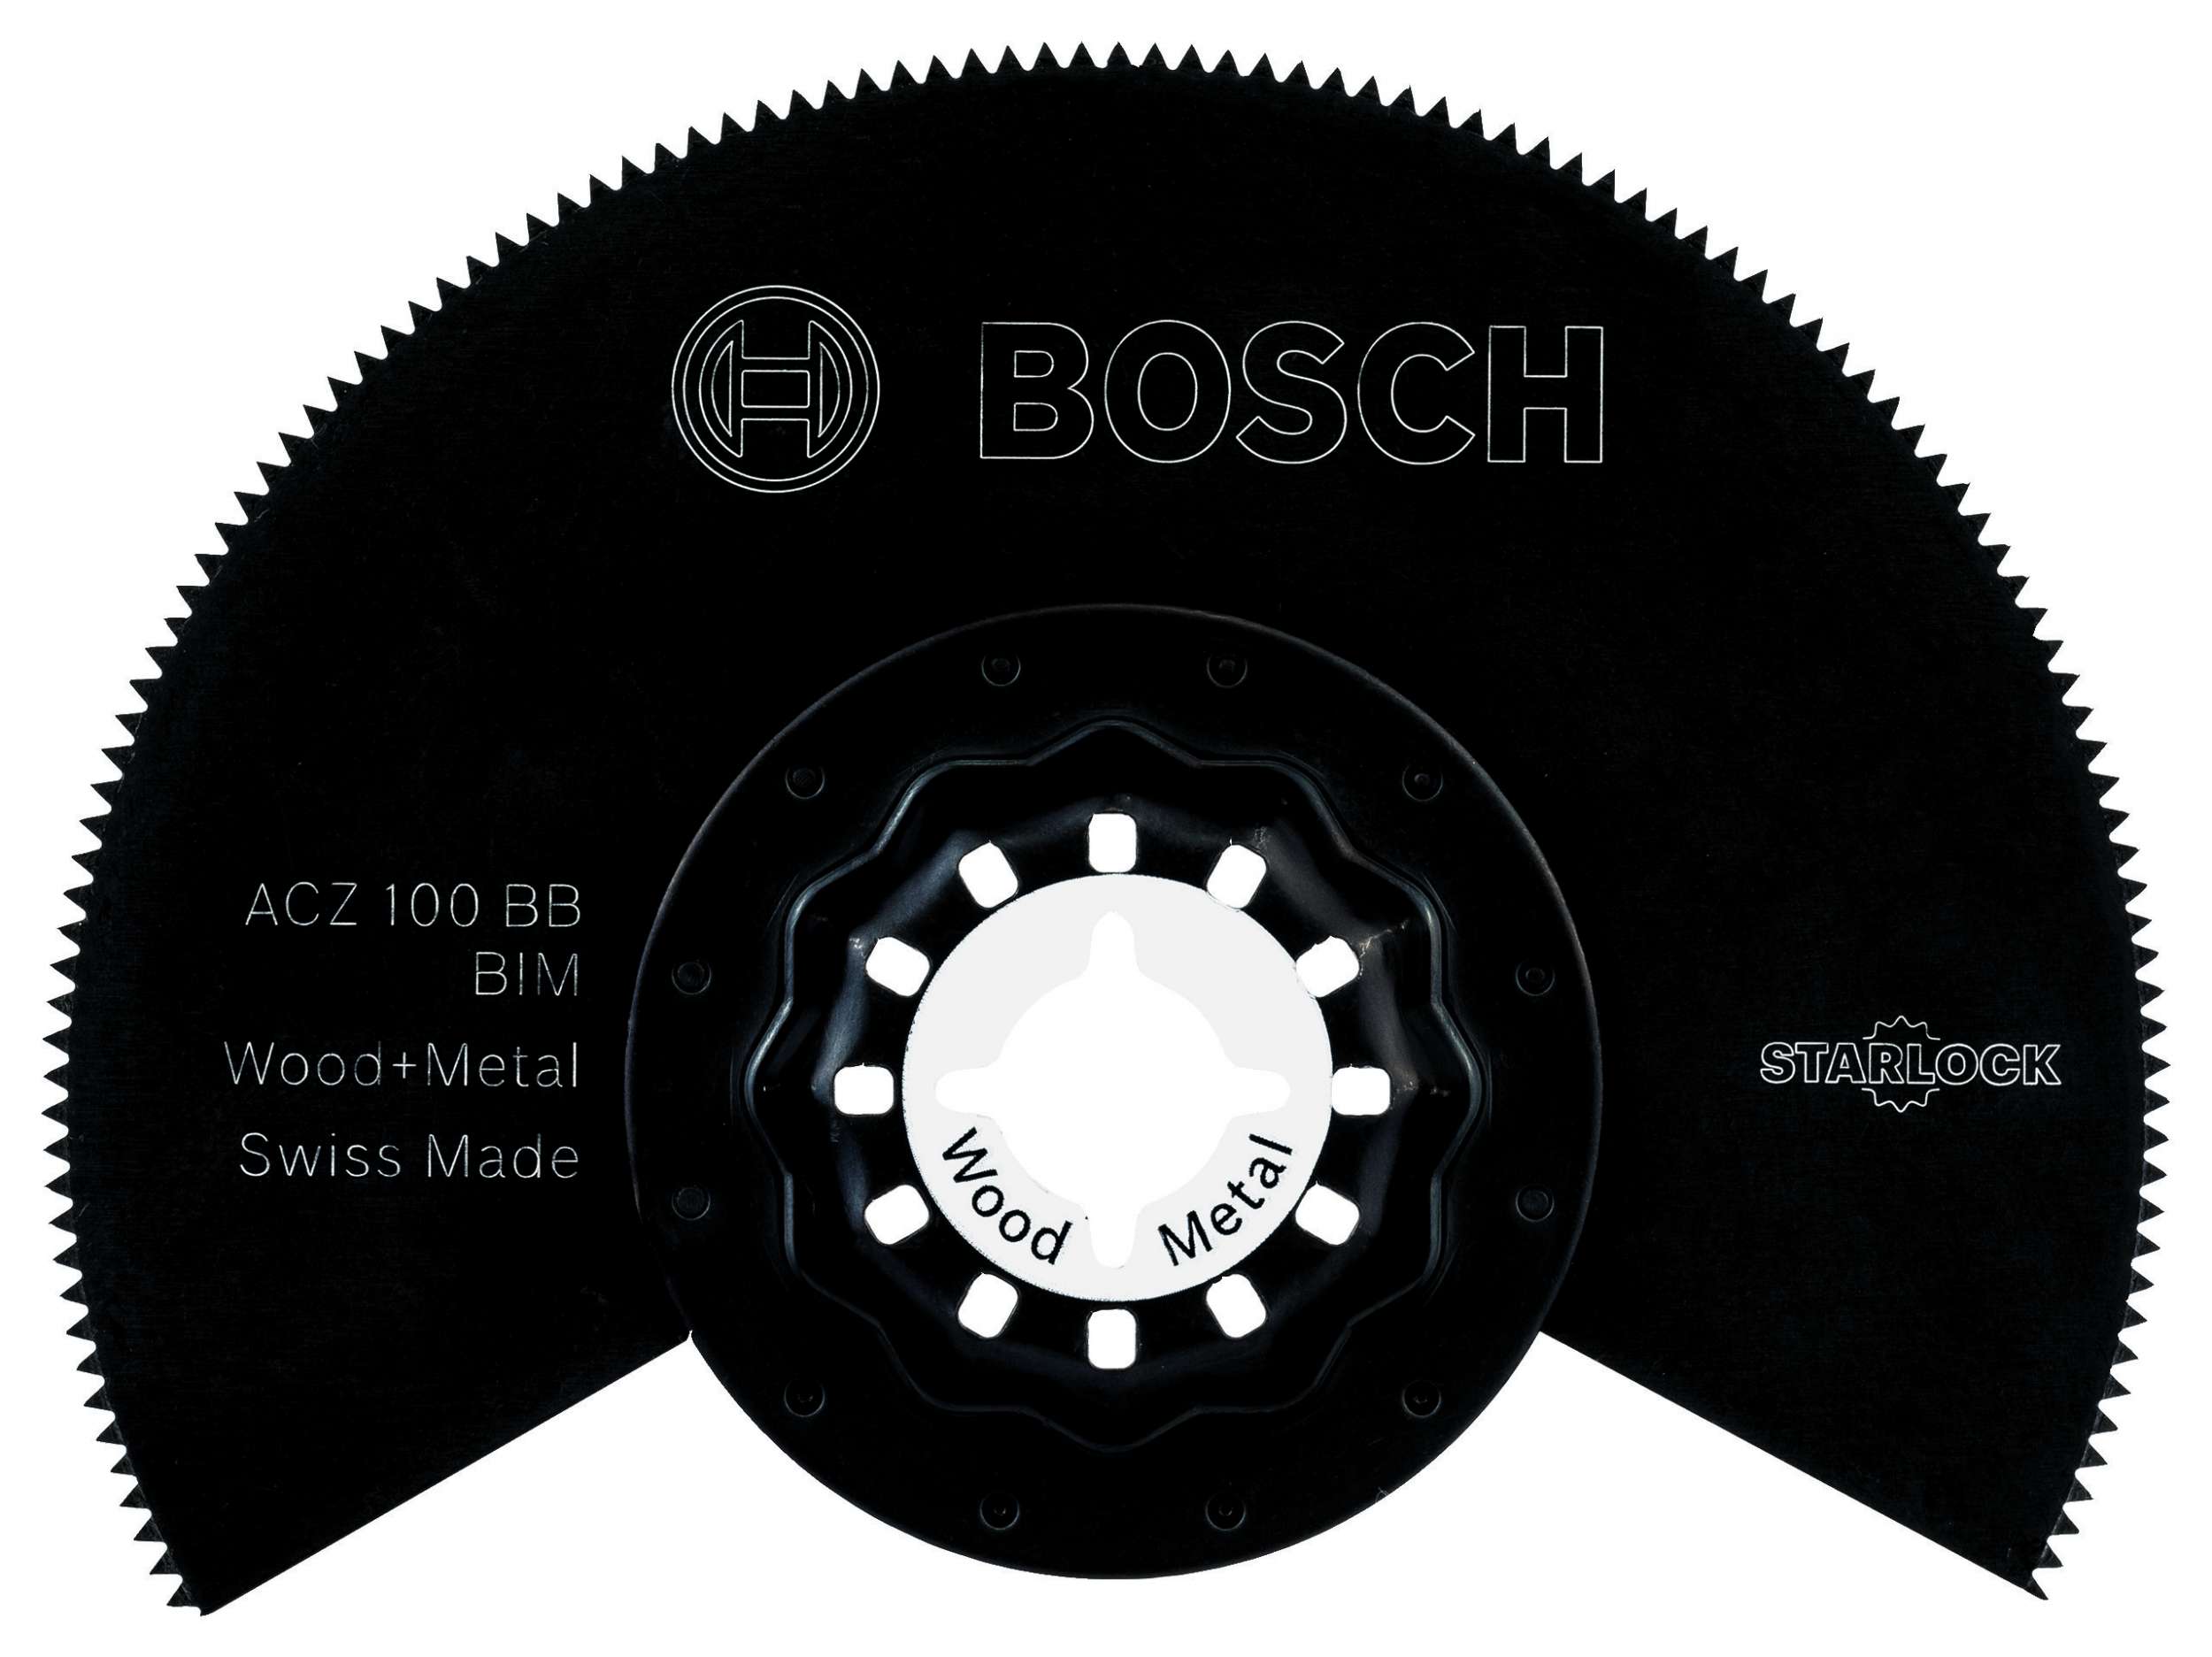 Bosch - Starlock - ACZ 100 BB - BIM Ahşap ve Metal İçin Segman Testere Bıçağı, Bombeli 10'lu